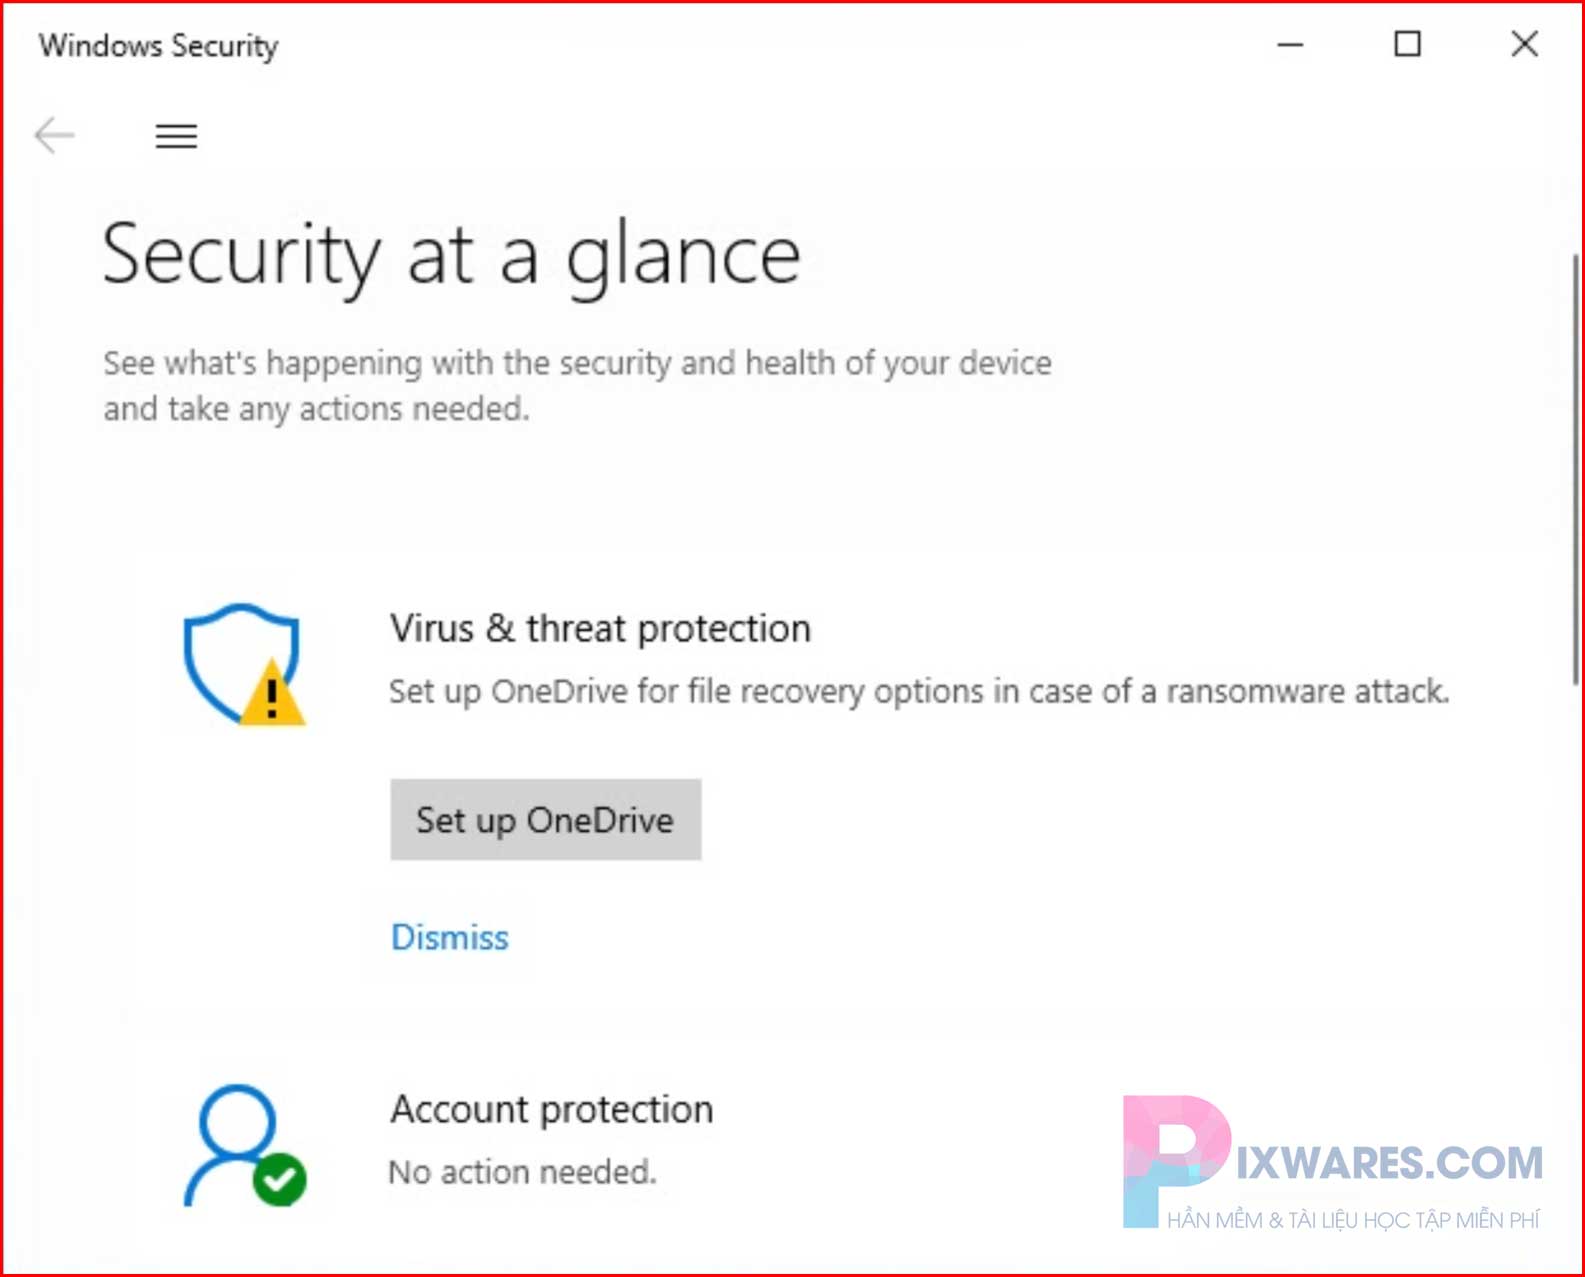 chon-virus-threat-protection